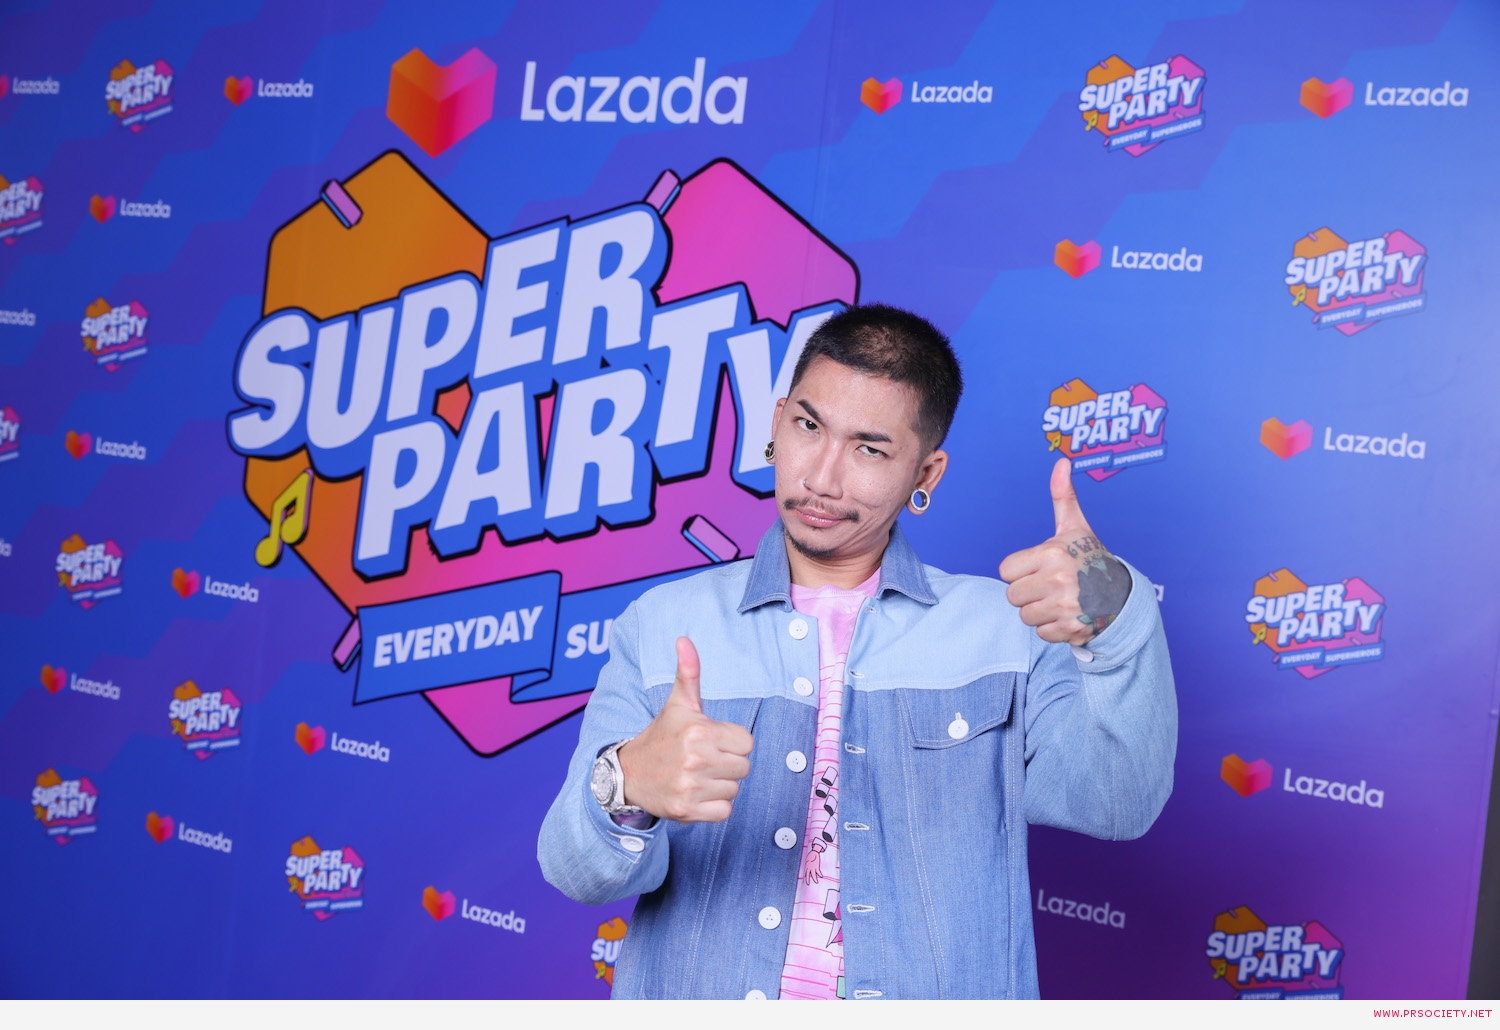 Jazz_Lazada Super Party (1)